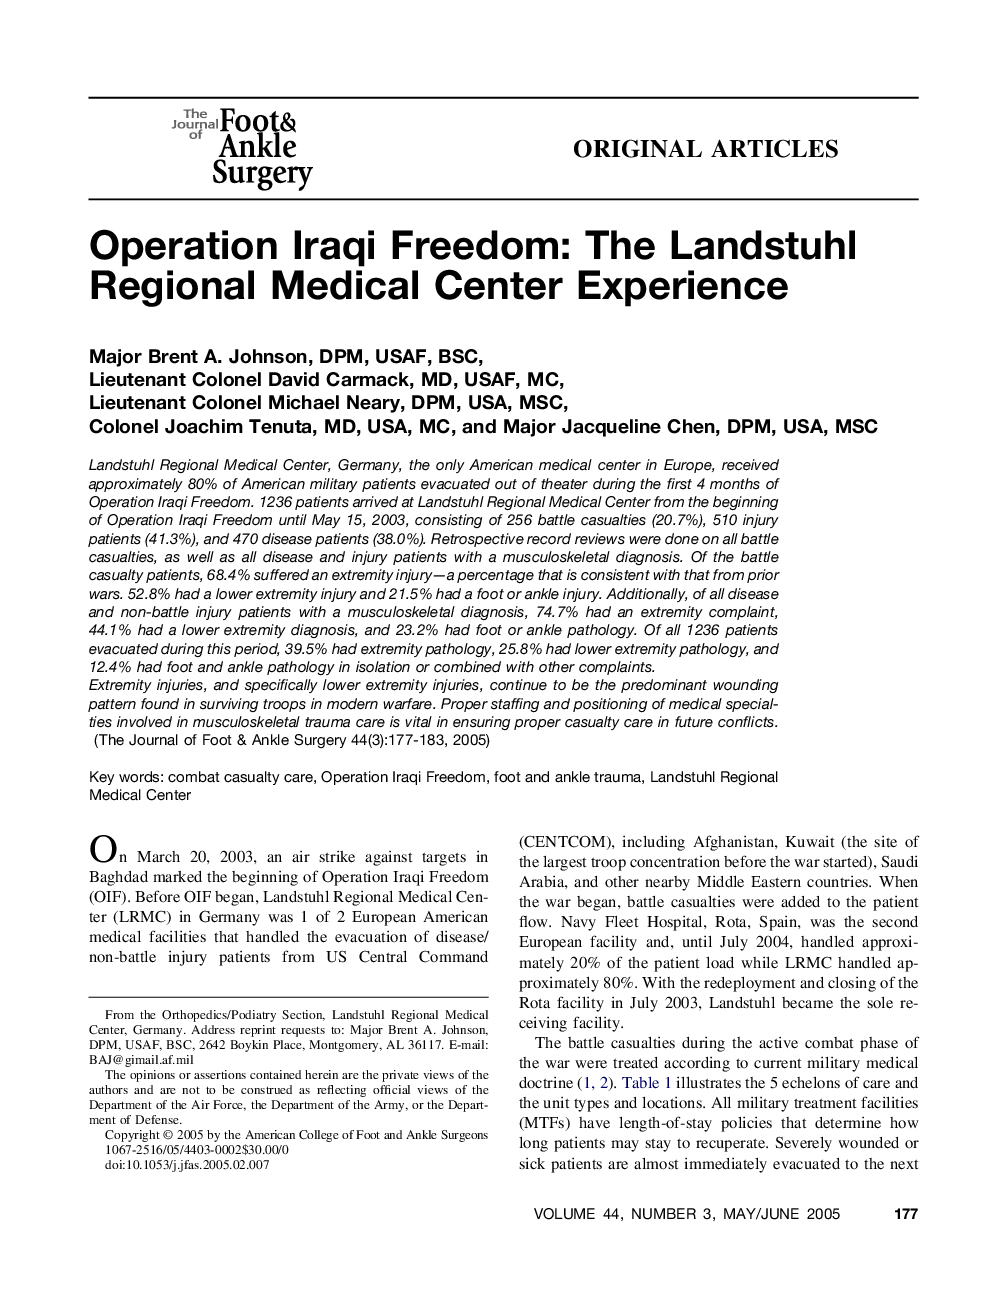 Operation Iraqi Freedom: The Landstuhl Regional Medical Center Experience